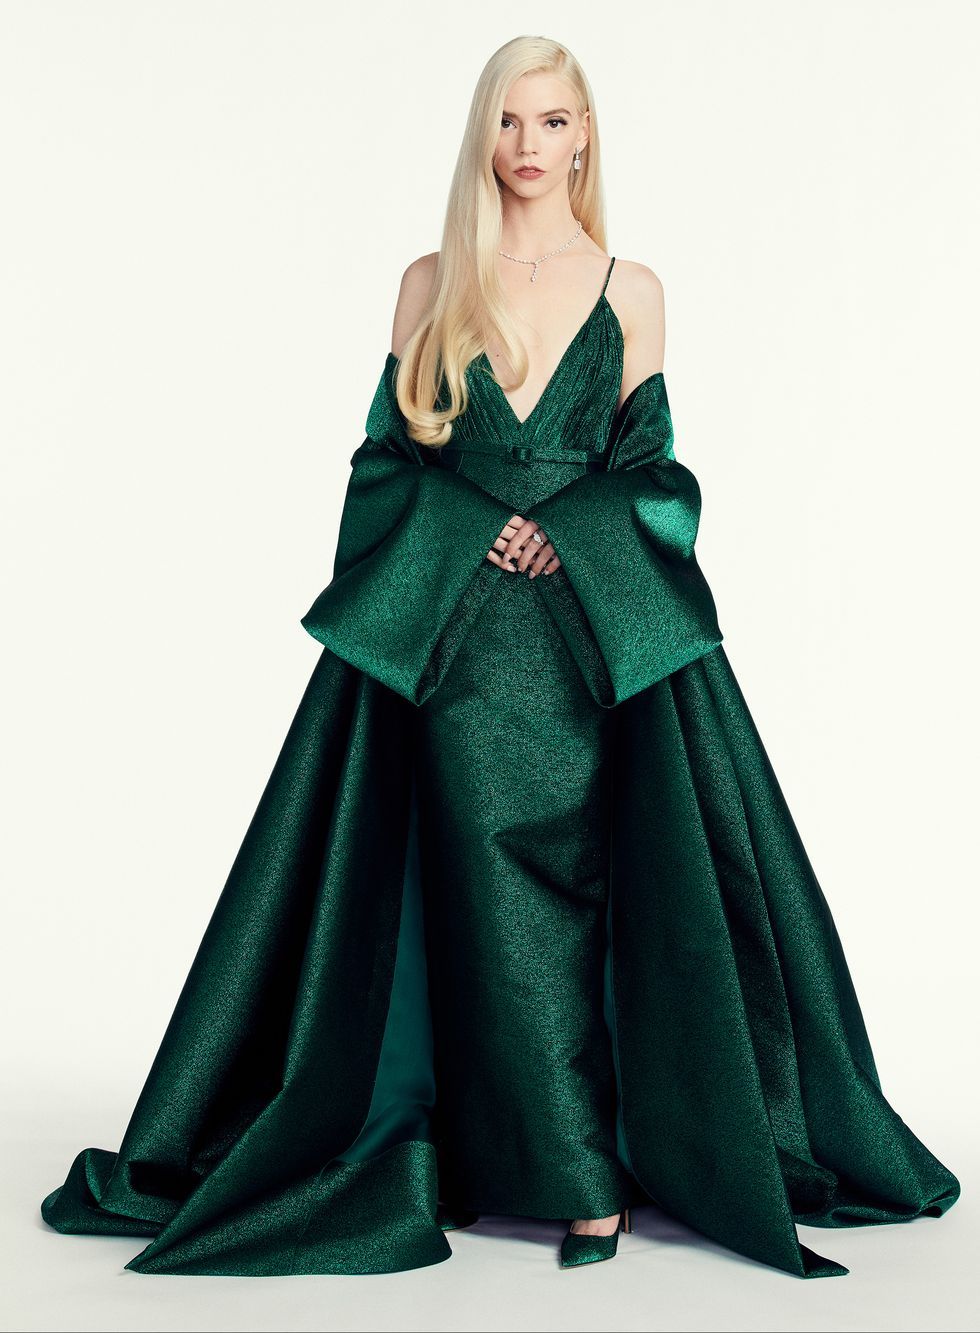 Anya Taylor-Joy in green Dior dress for ...